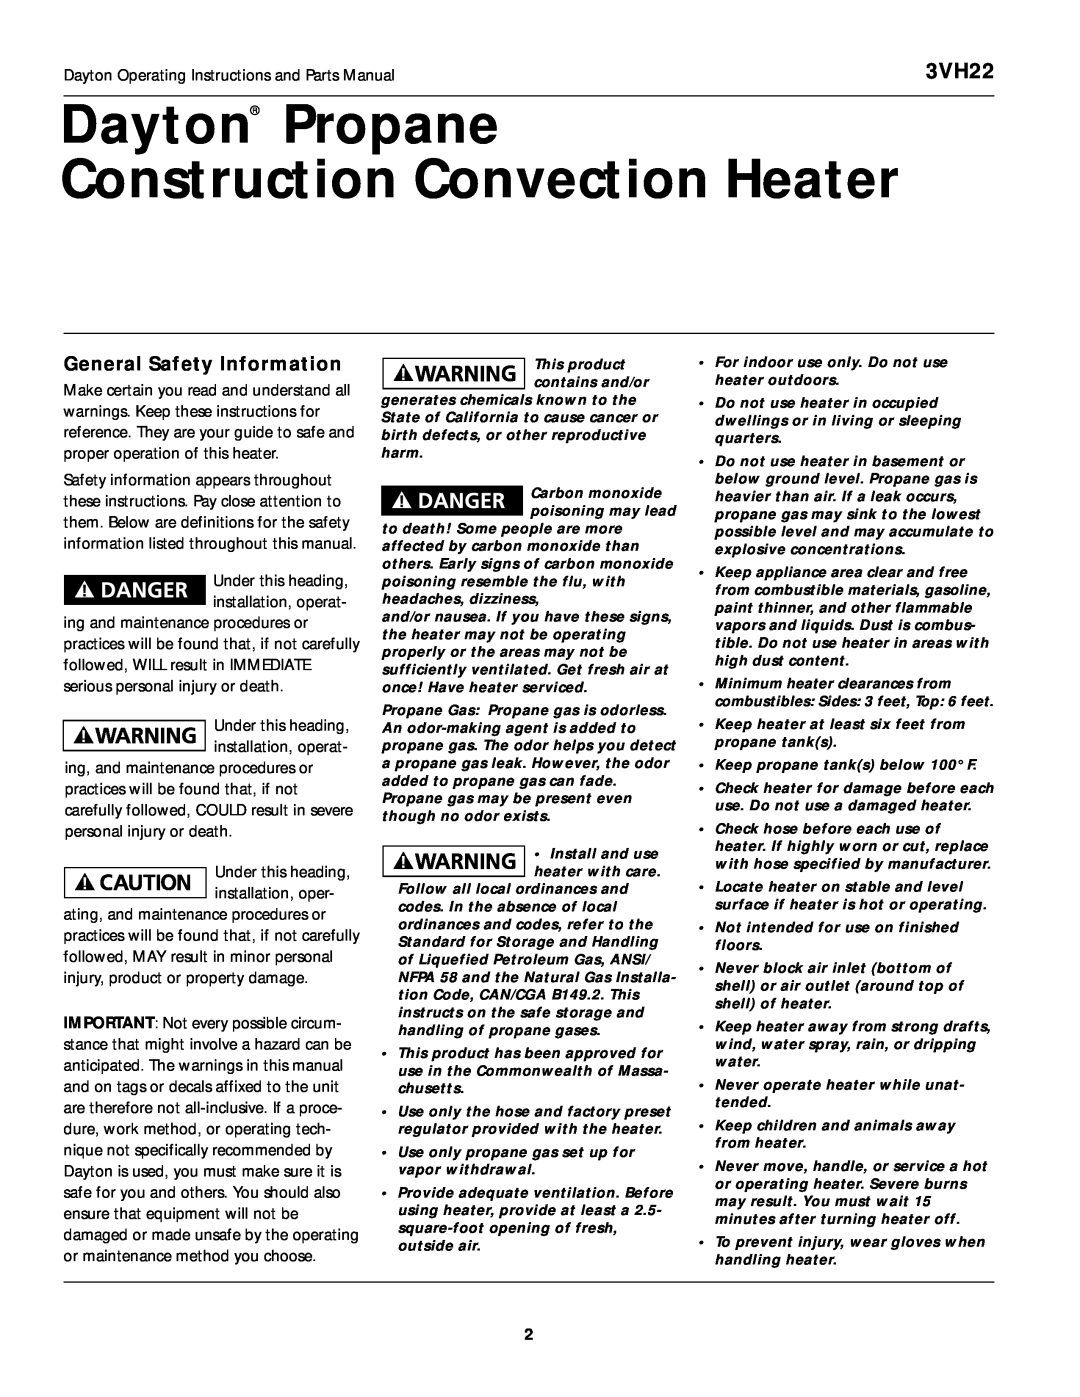 Desa 3VH22 instruction manual Dayton Propane Construction Convection Heater, General Safety Information 